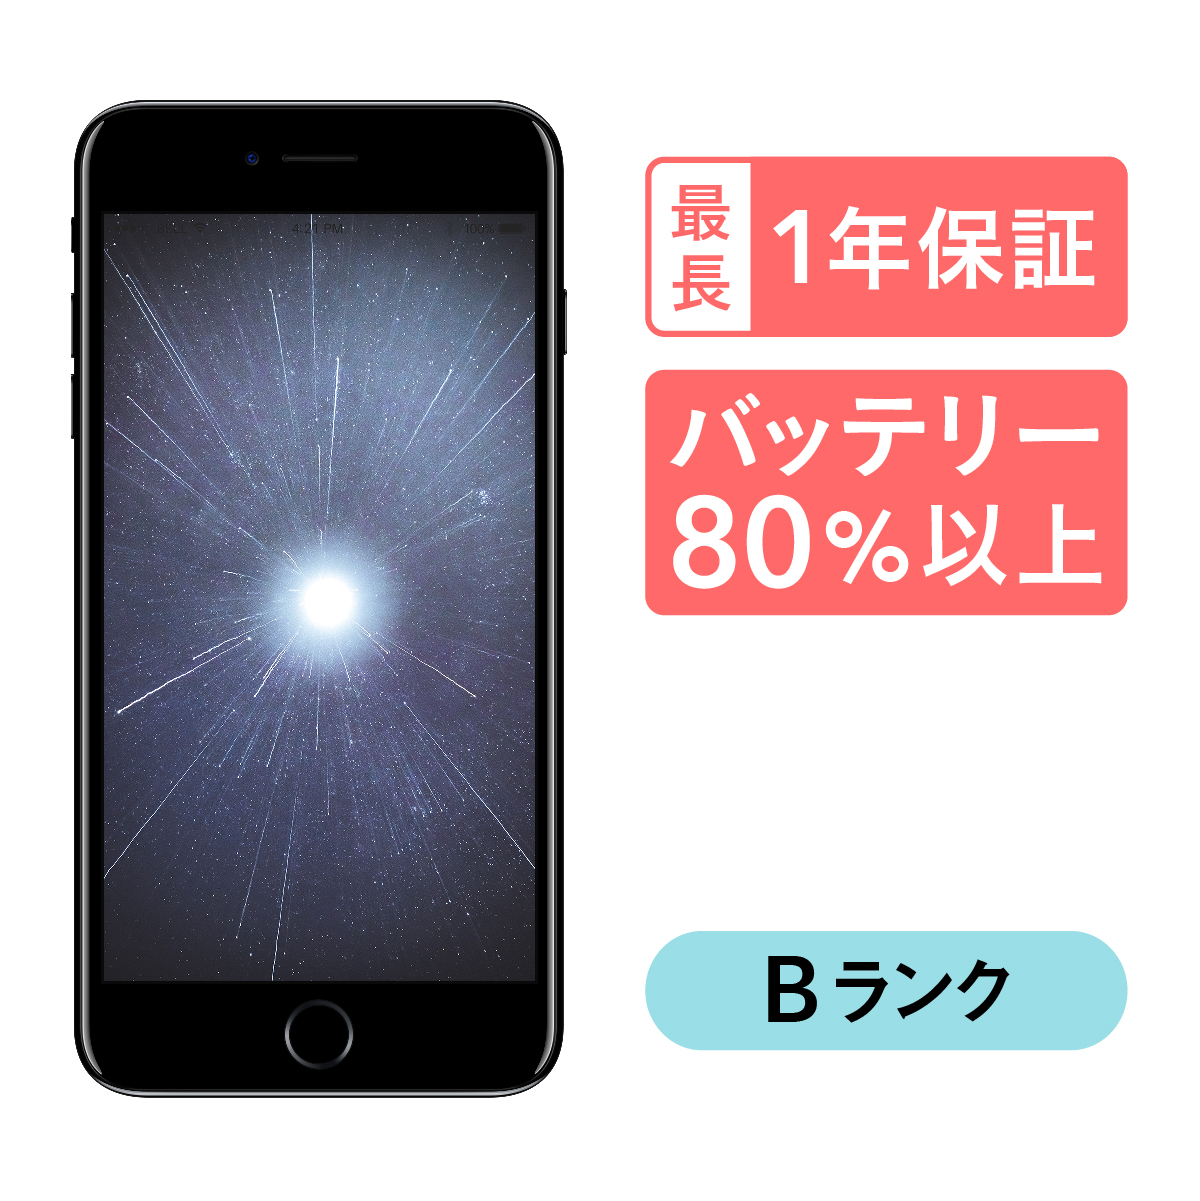 iPhone Plus Silver 32 GB Softbank